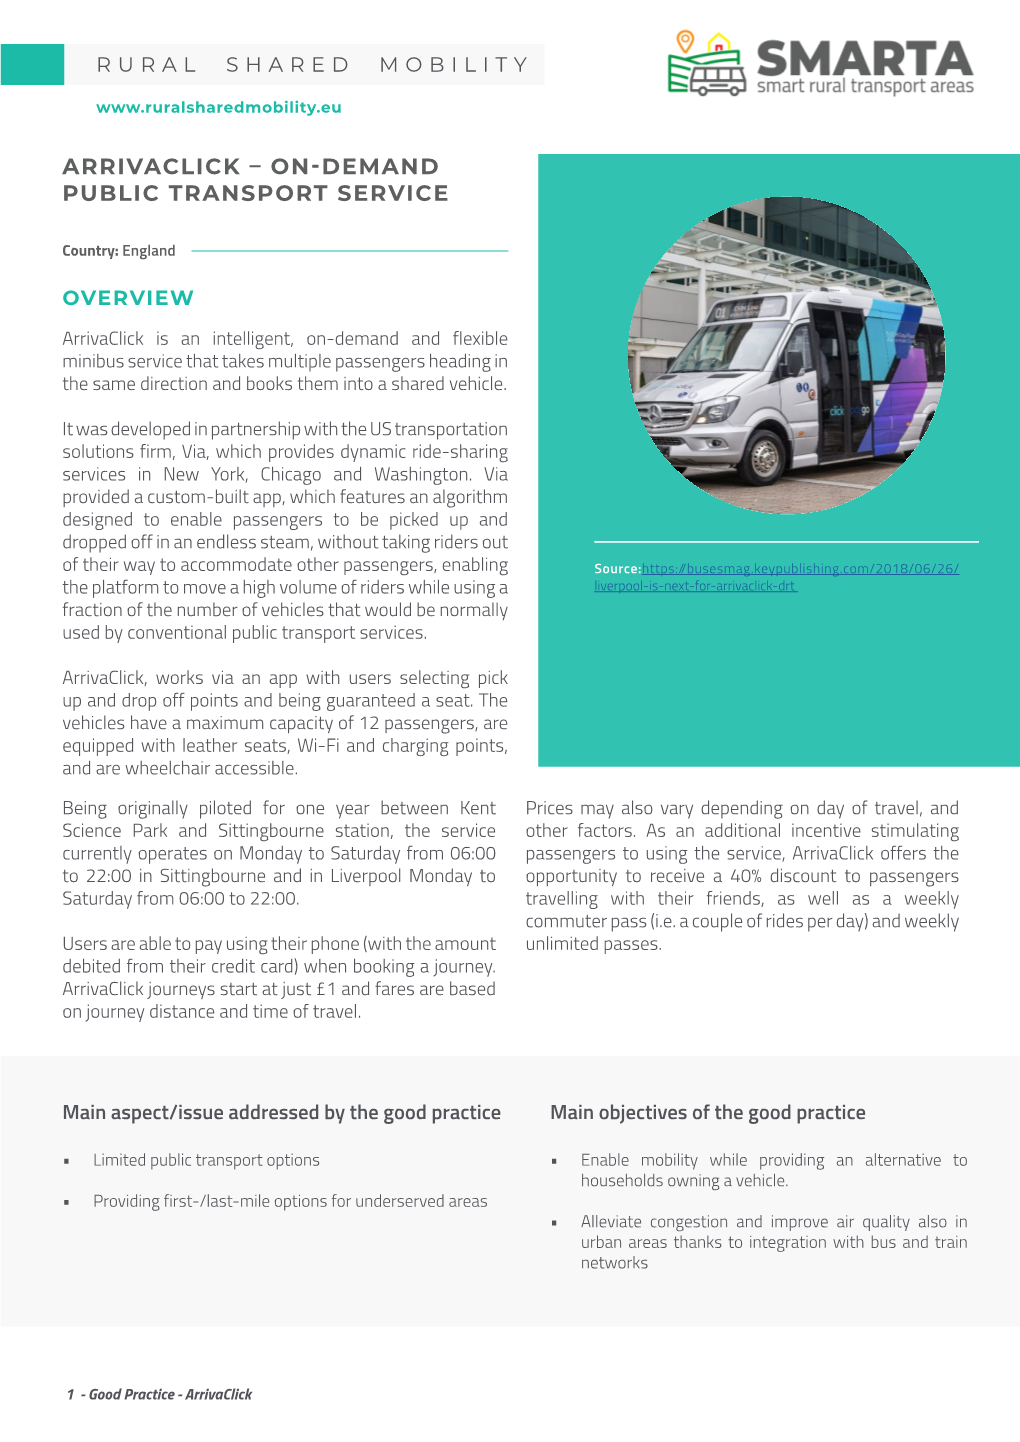 Arrivaclick – On-Demand Public Transport Service